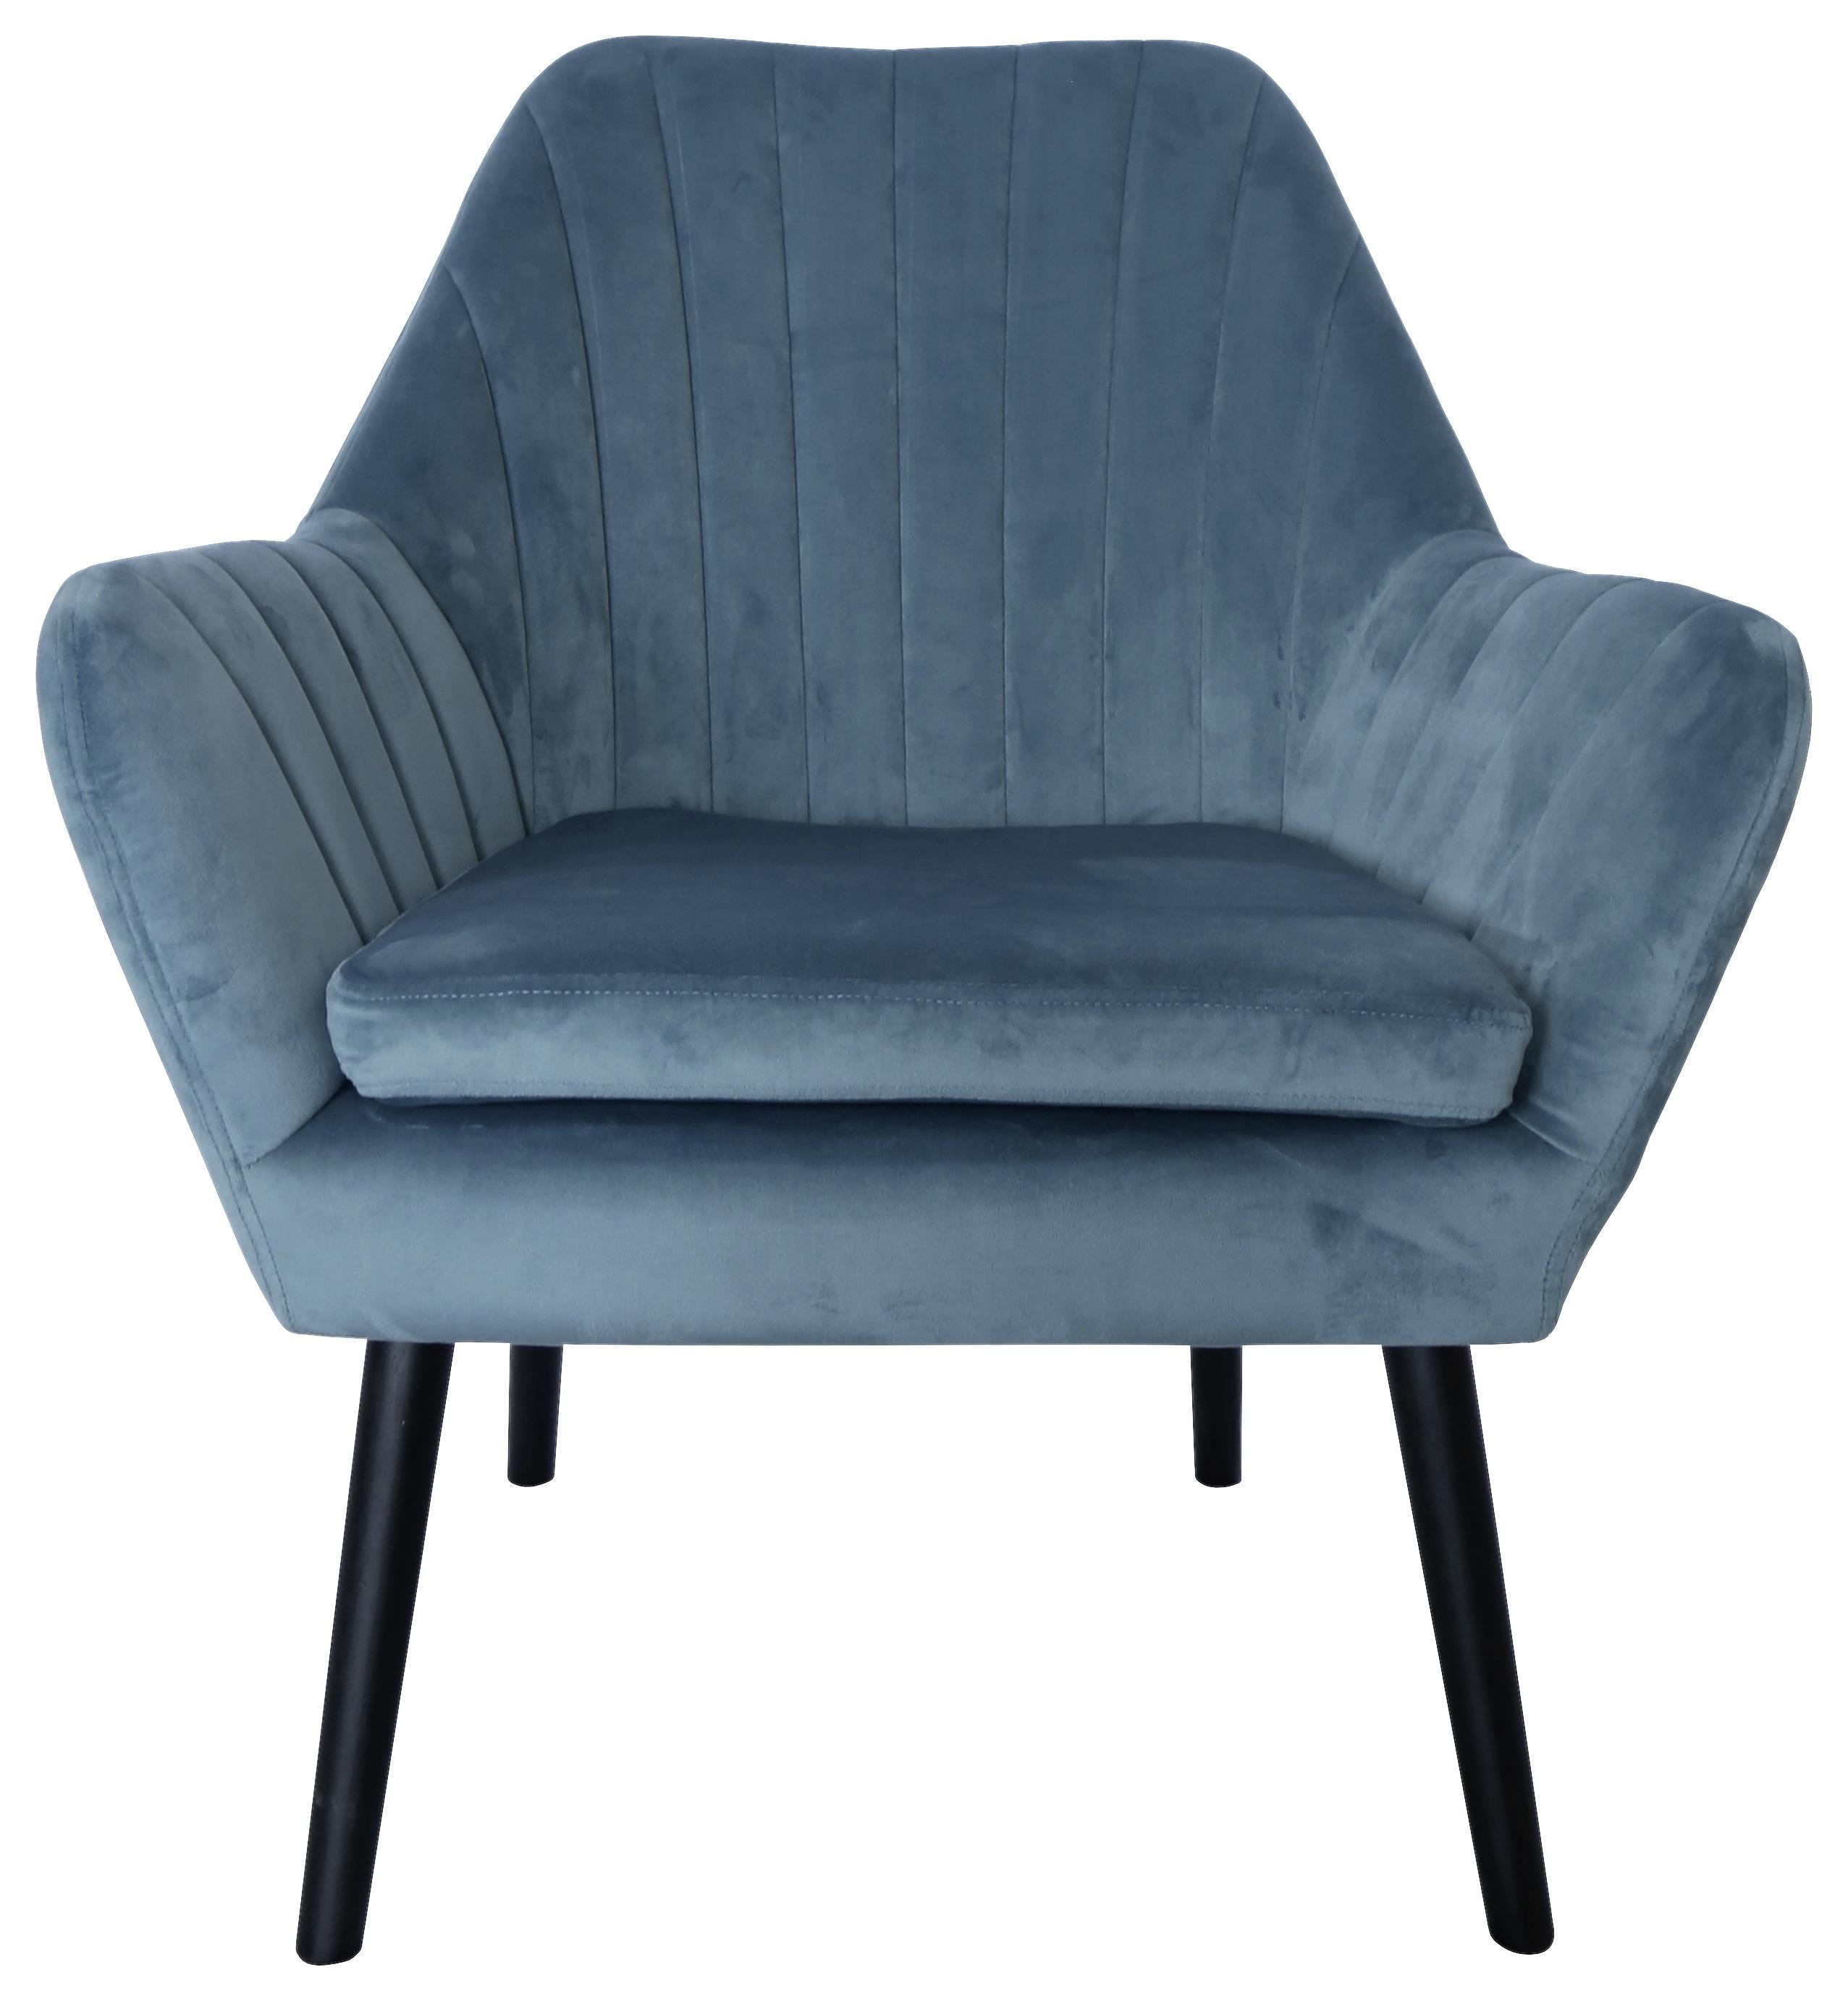 Sessel aus Samt in Blau - Blau/Schwarz, Modern, Holz/Textil (72/84/70cm) - Modern Living